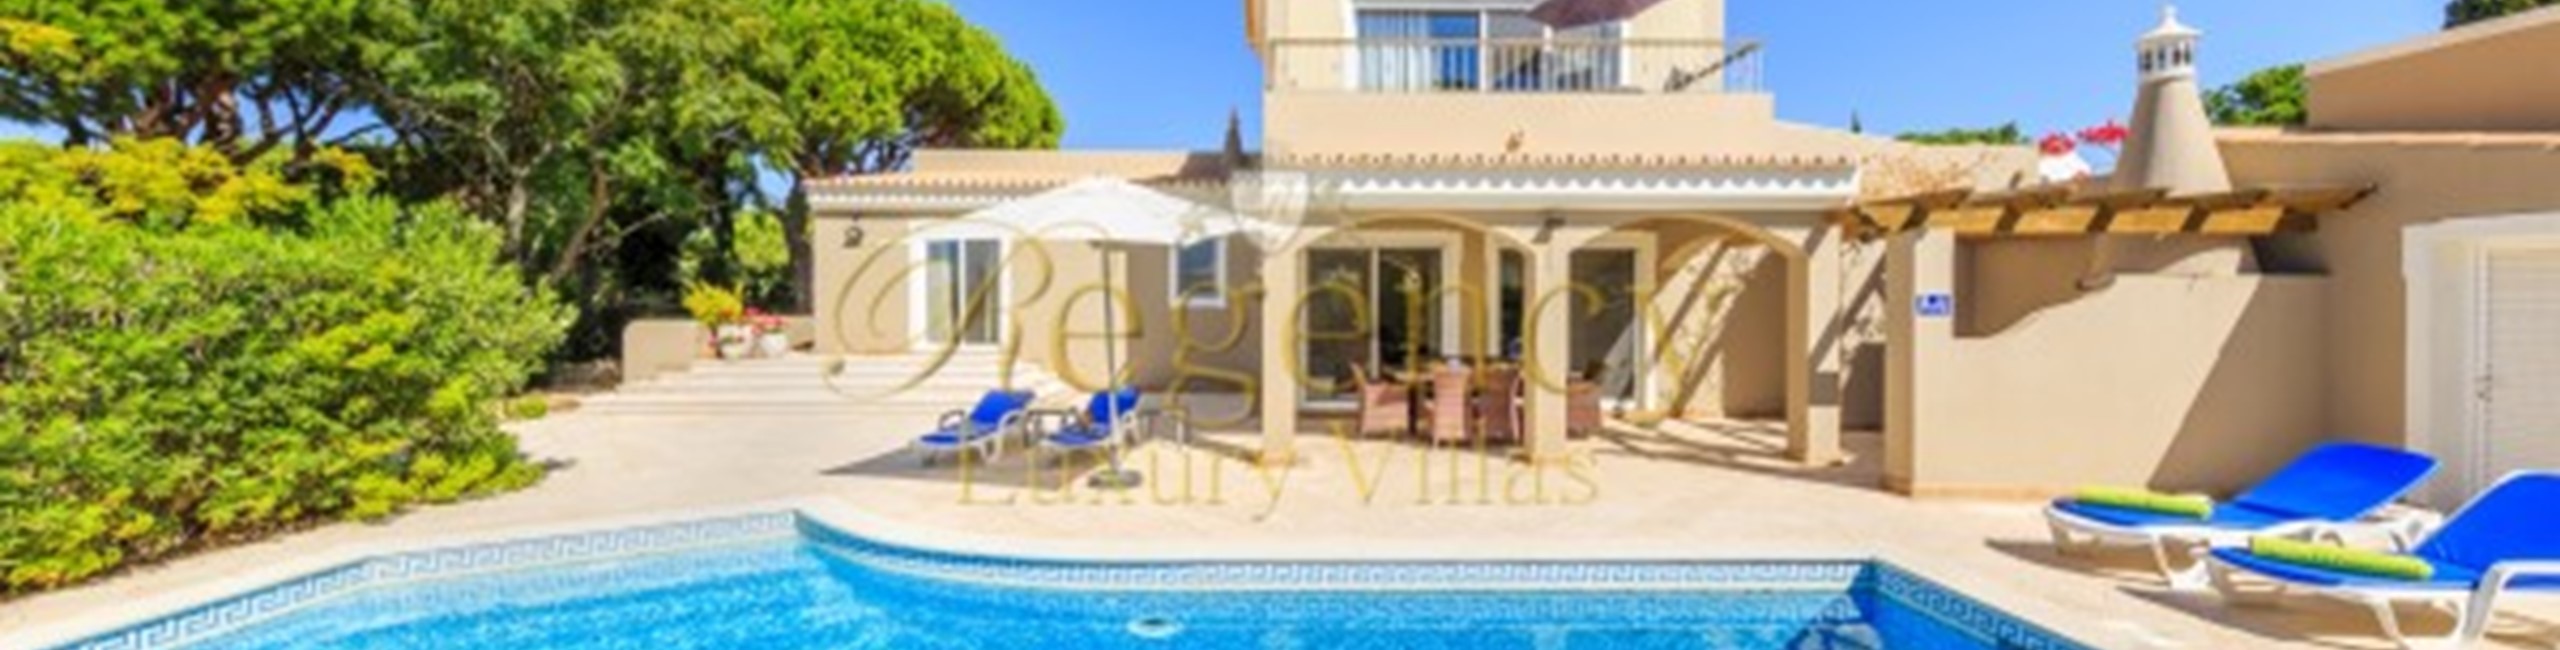 Vale Do Lobo 4 Bedroom Luxury Villa To Rent Portugal Regency Luxury Villas 